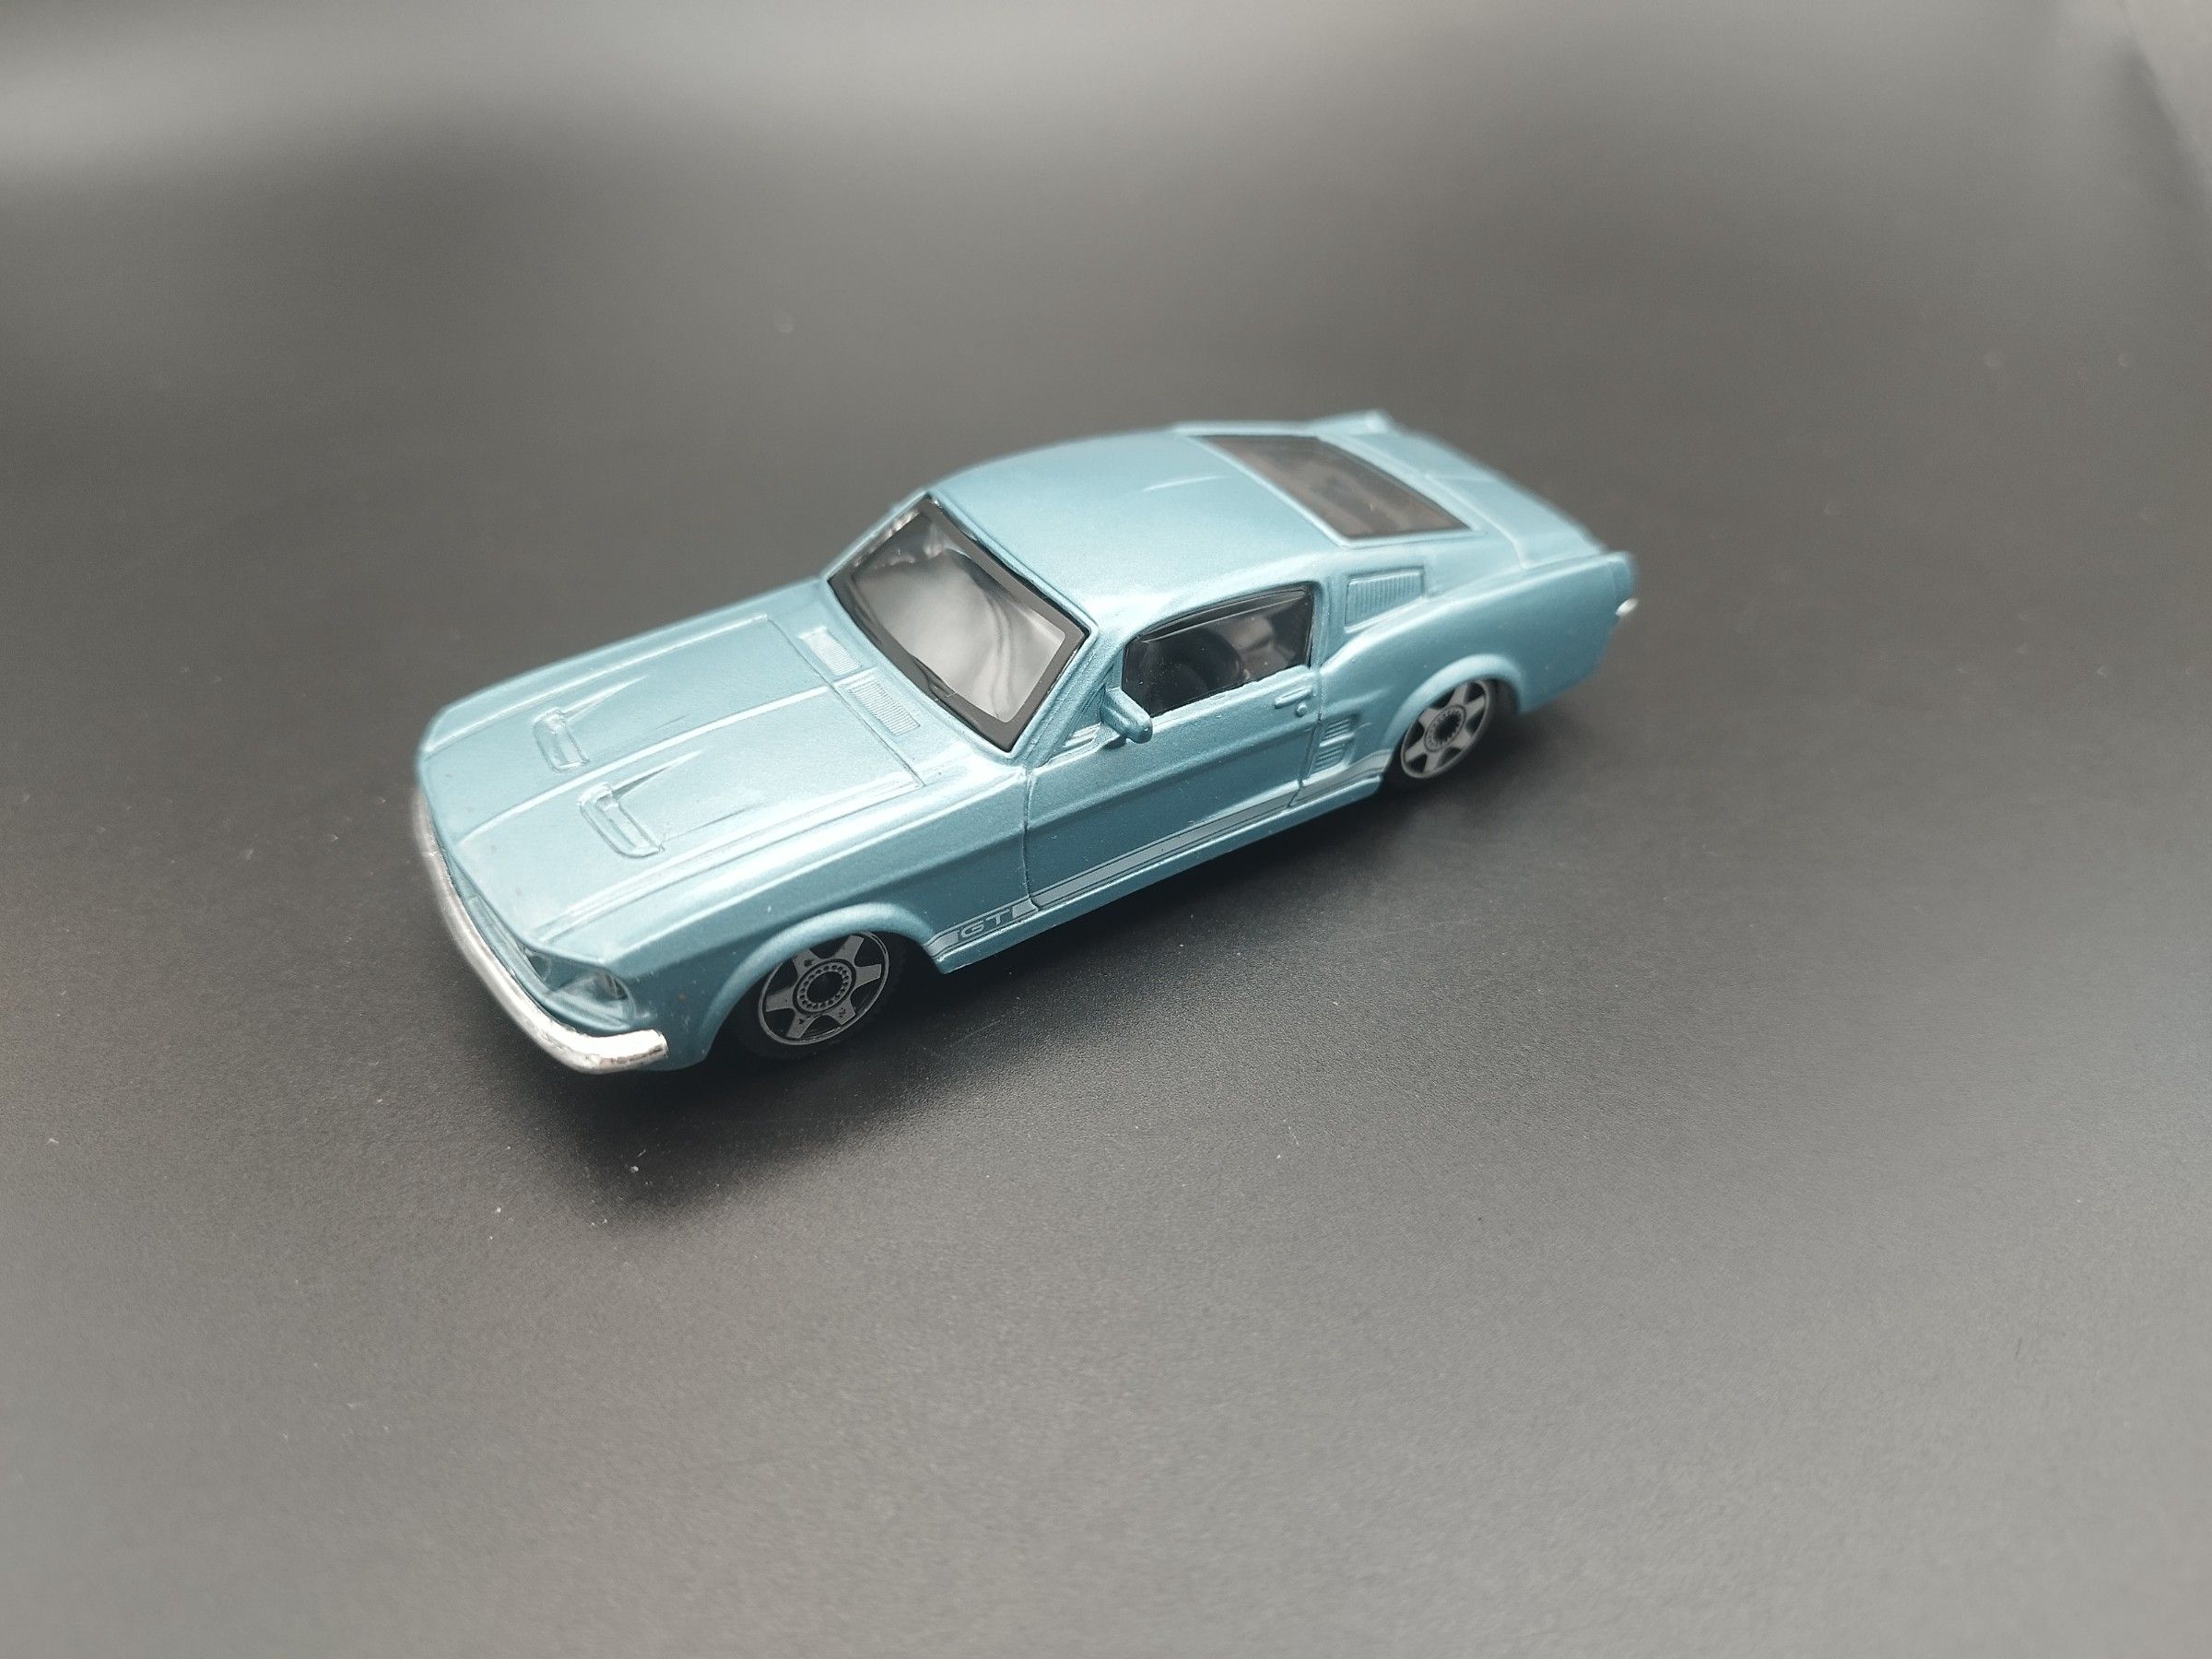 1:43 Bburago Ford Mustang G.T. Model